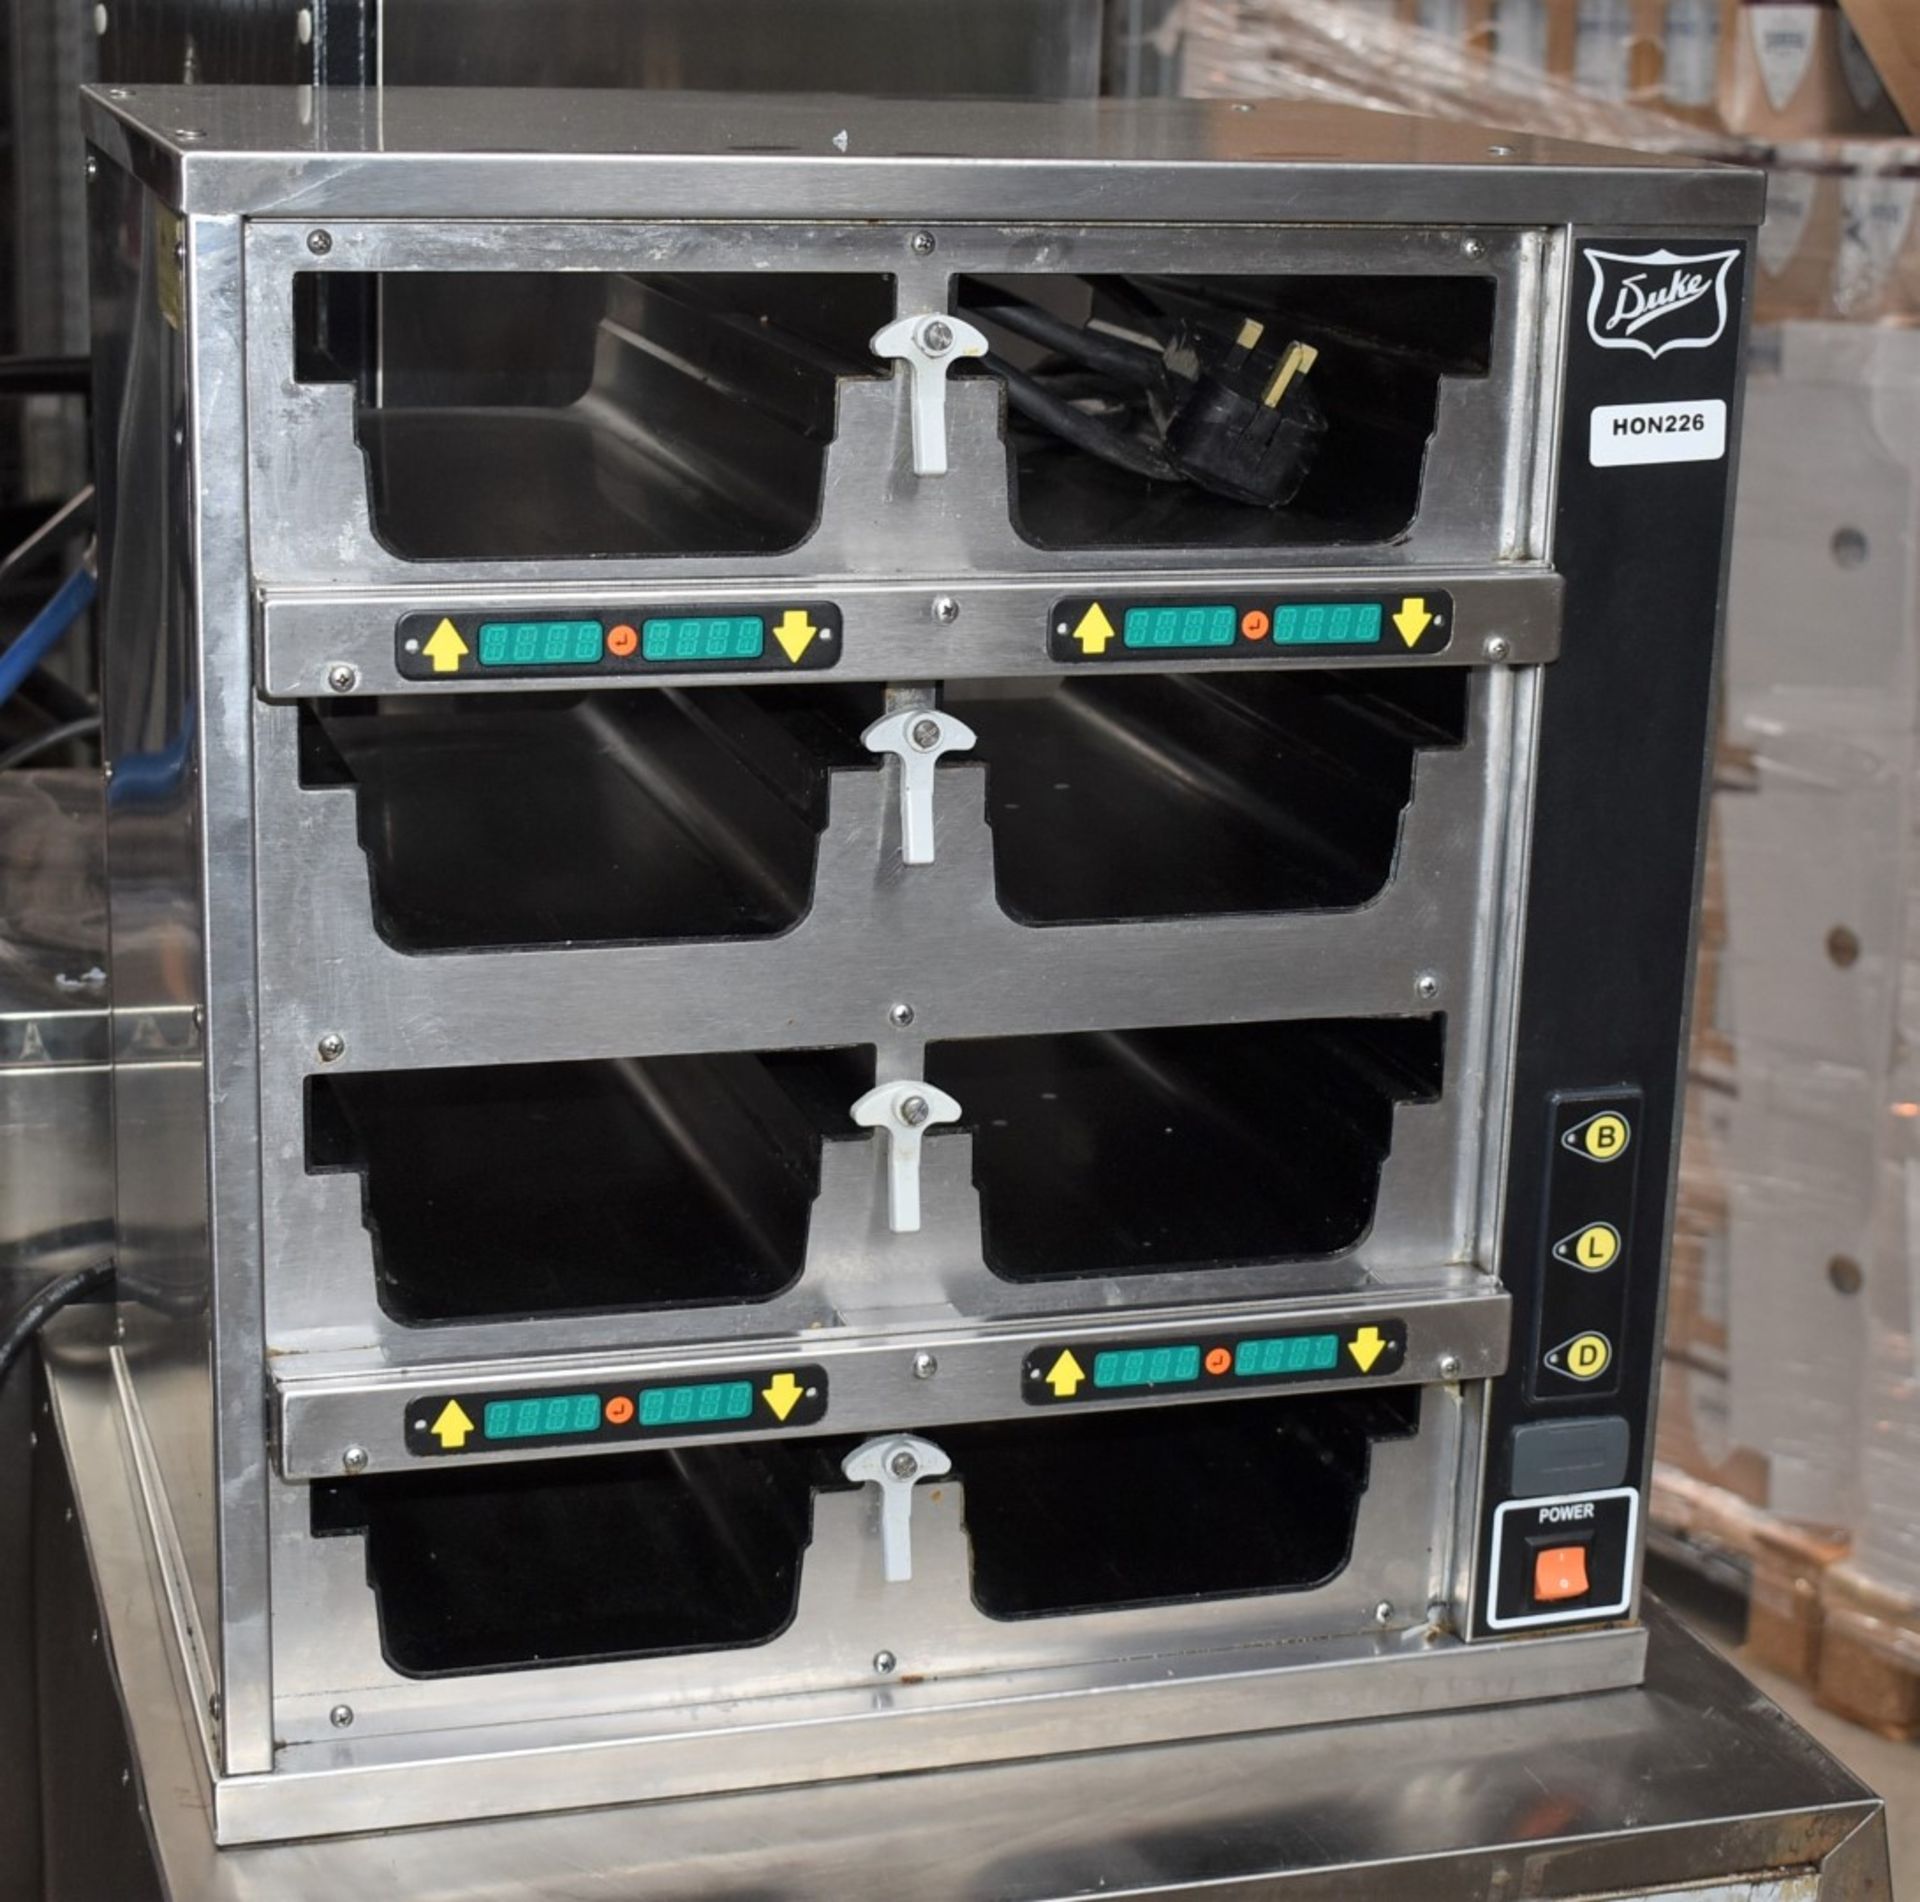 1 x Duke FWM Food Warming Holding Cabinet With HeatSinnk Technology - Model FWM3-42PR6-230 - Image 5 of 11